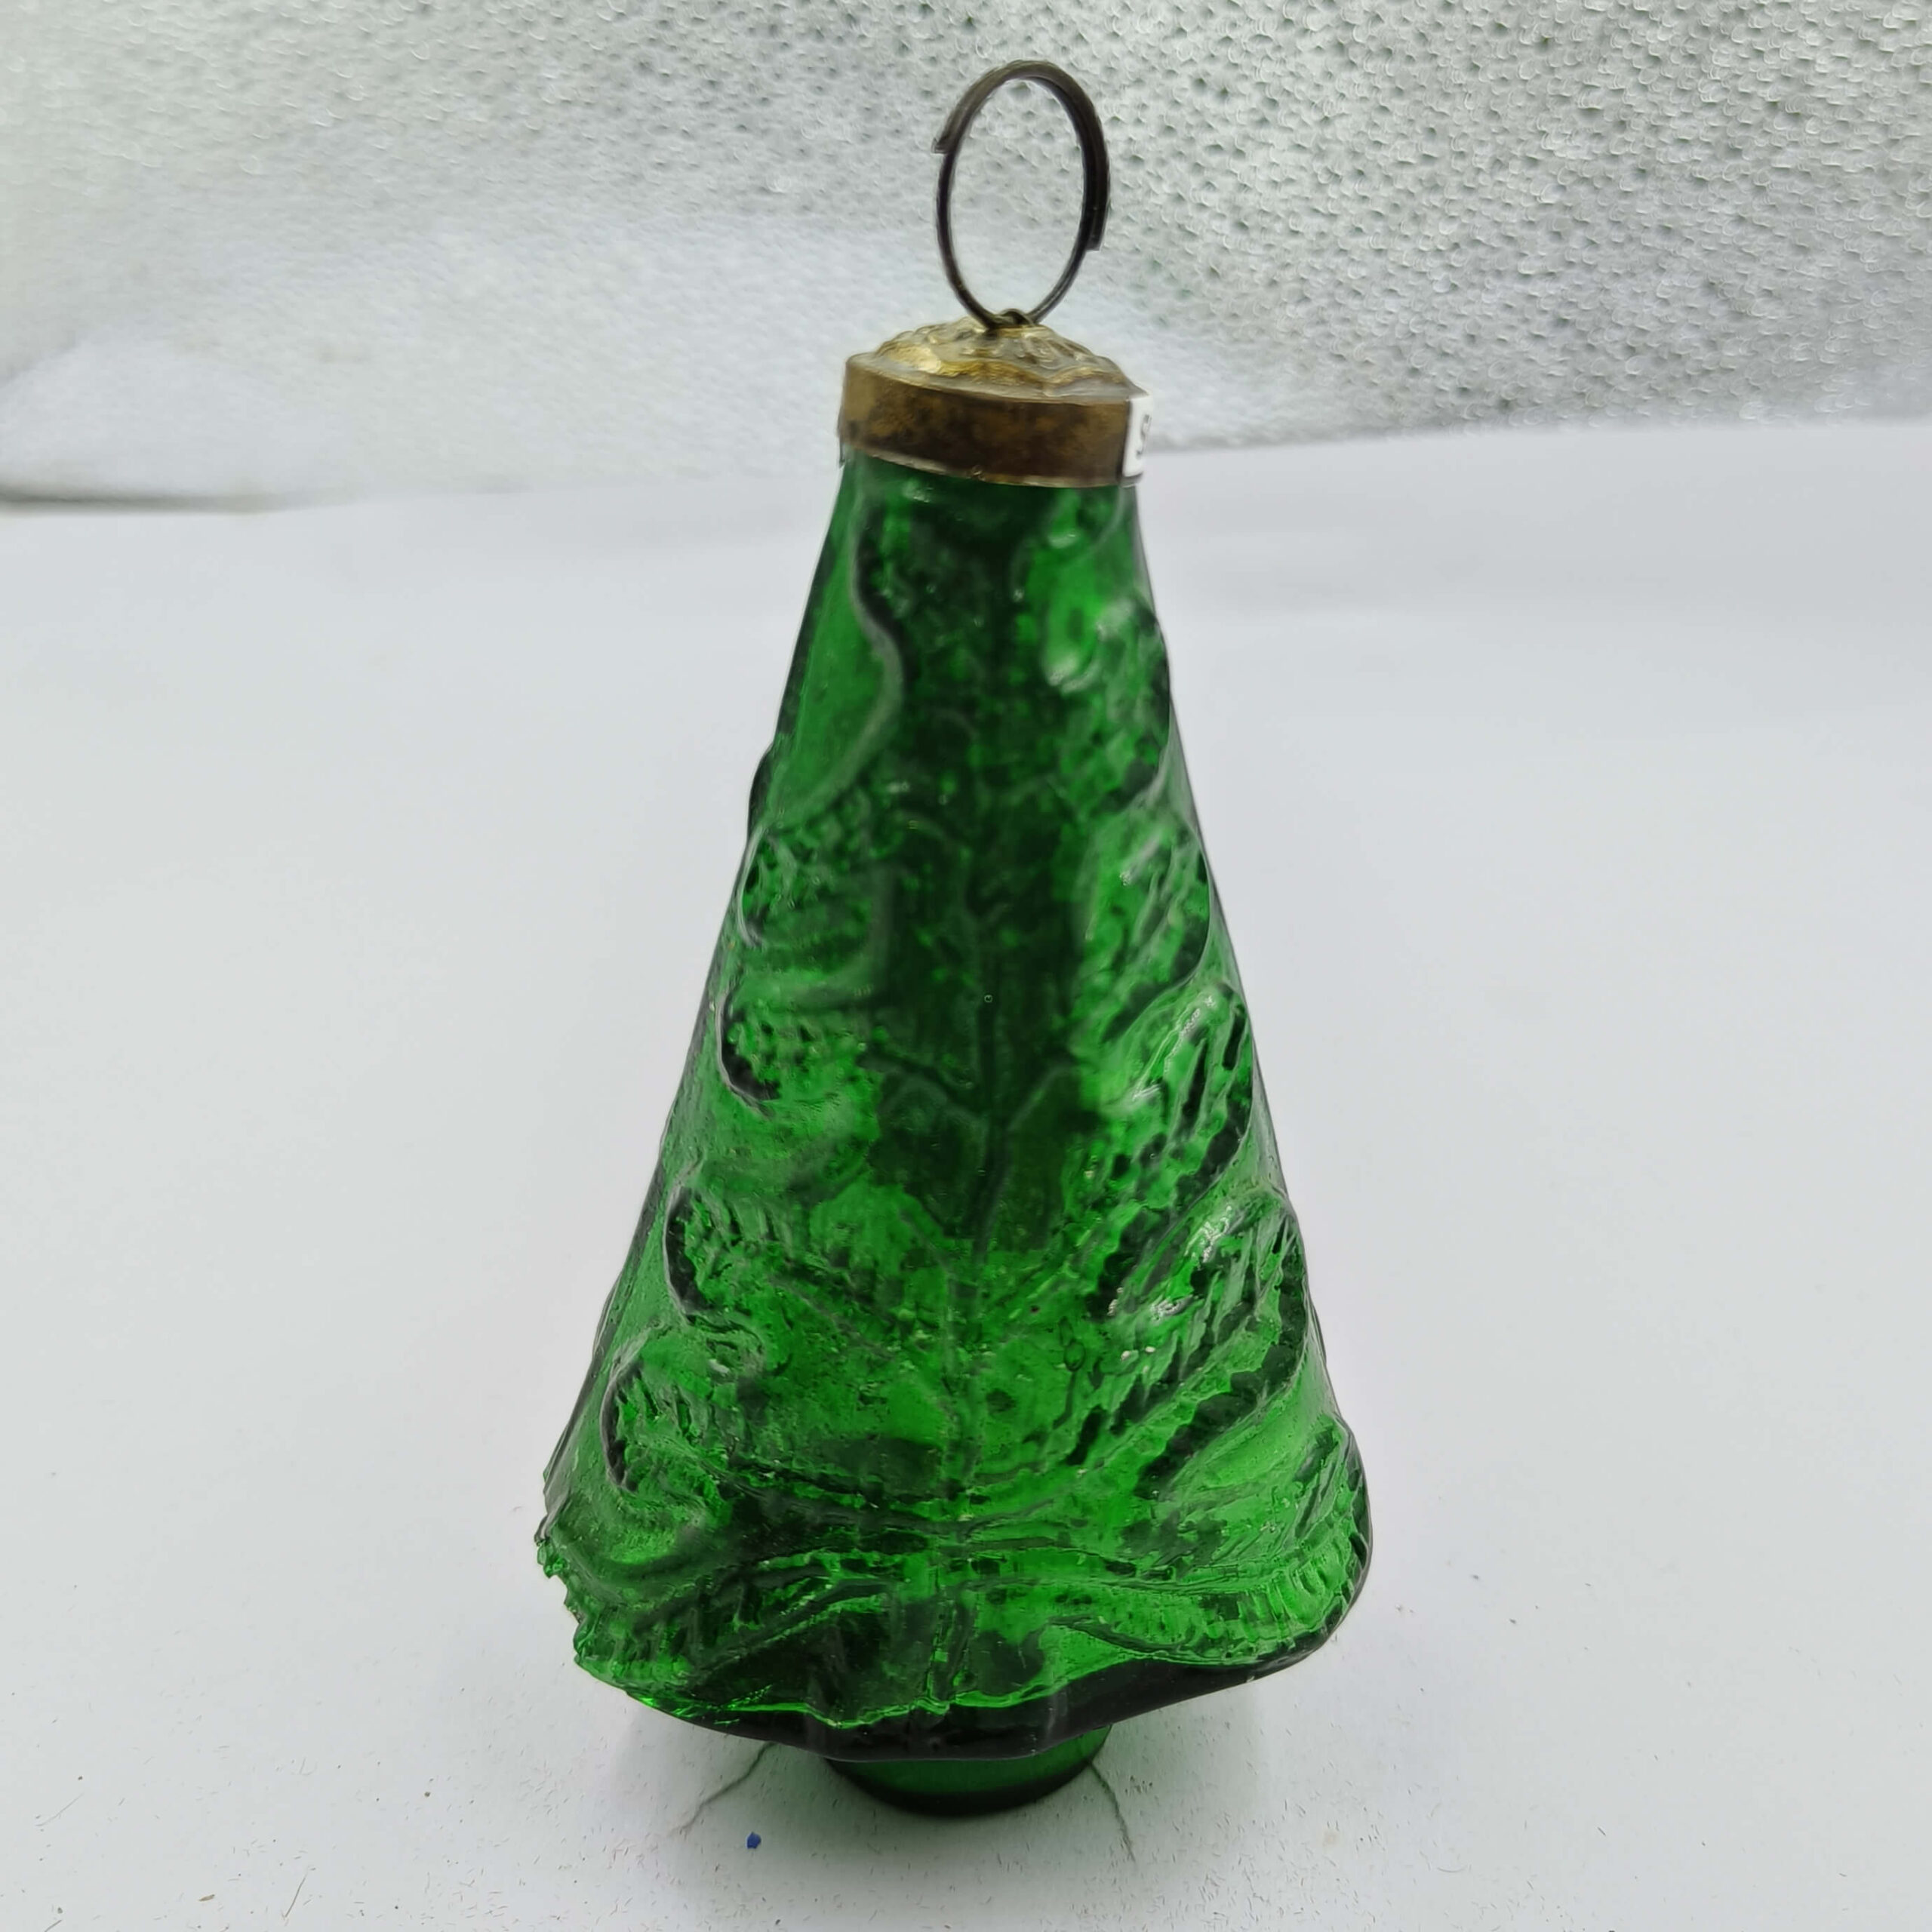 Shannay Glass Ornament, Green